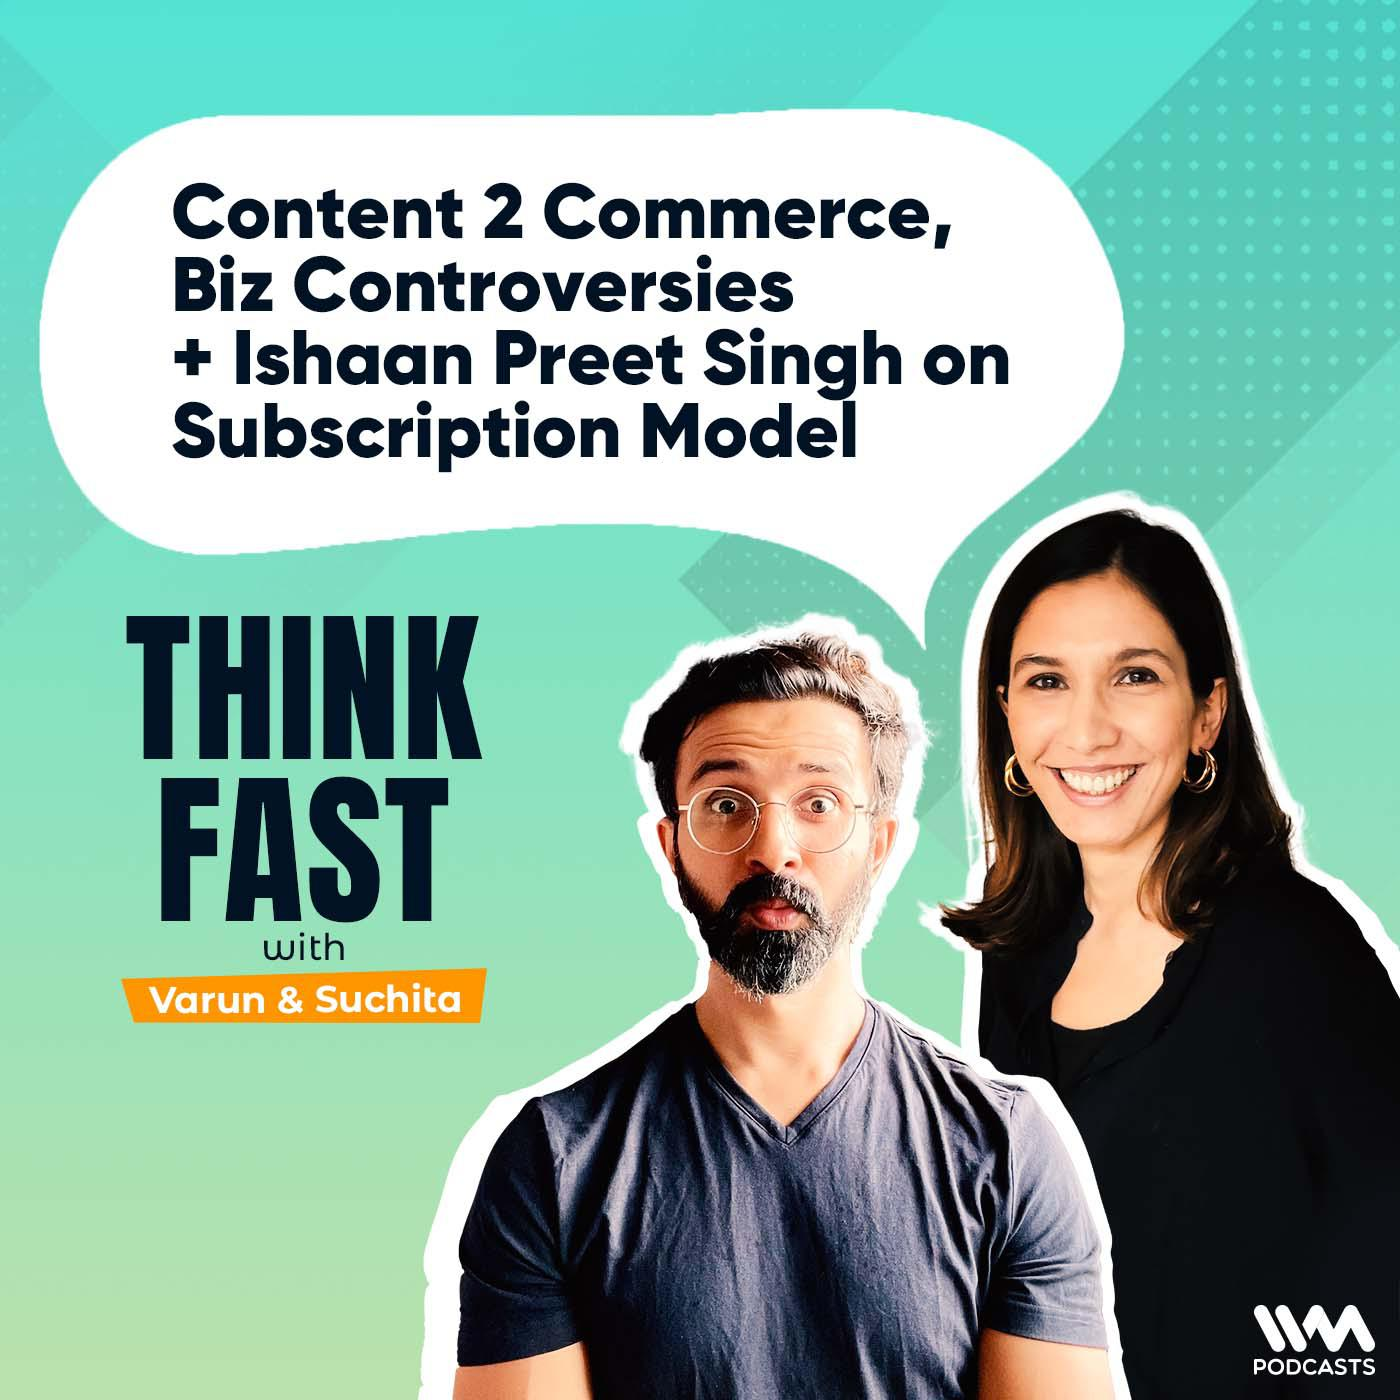 Content 2 Commerce, Biz Controversies + Ishaan Preet Singh on Subscription Model